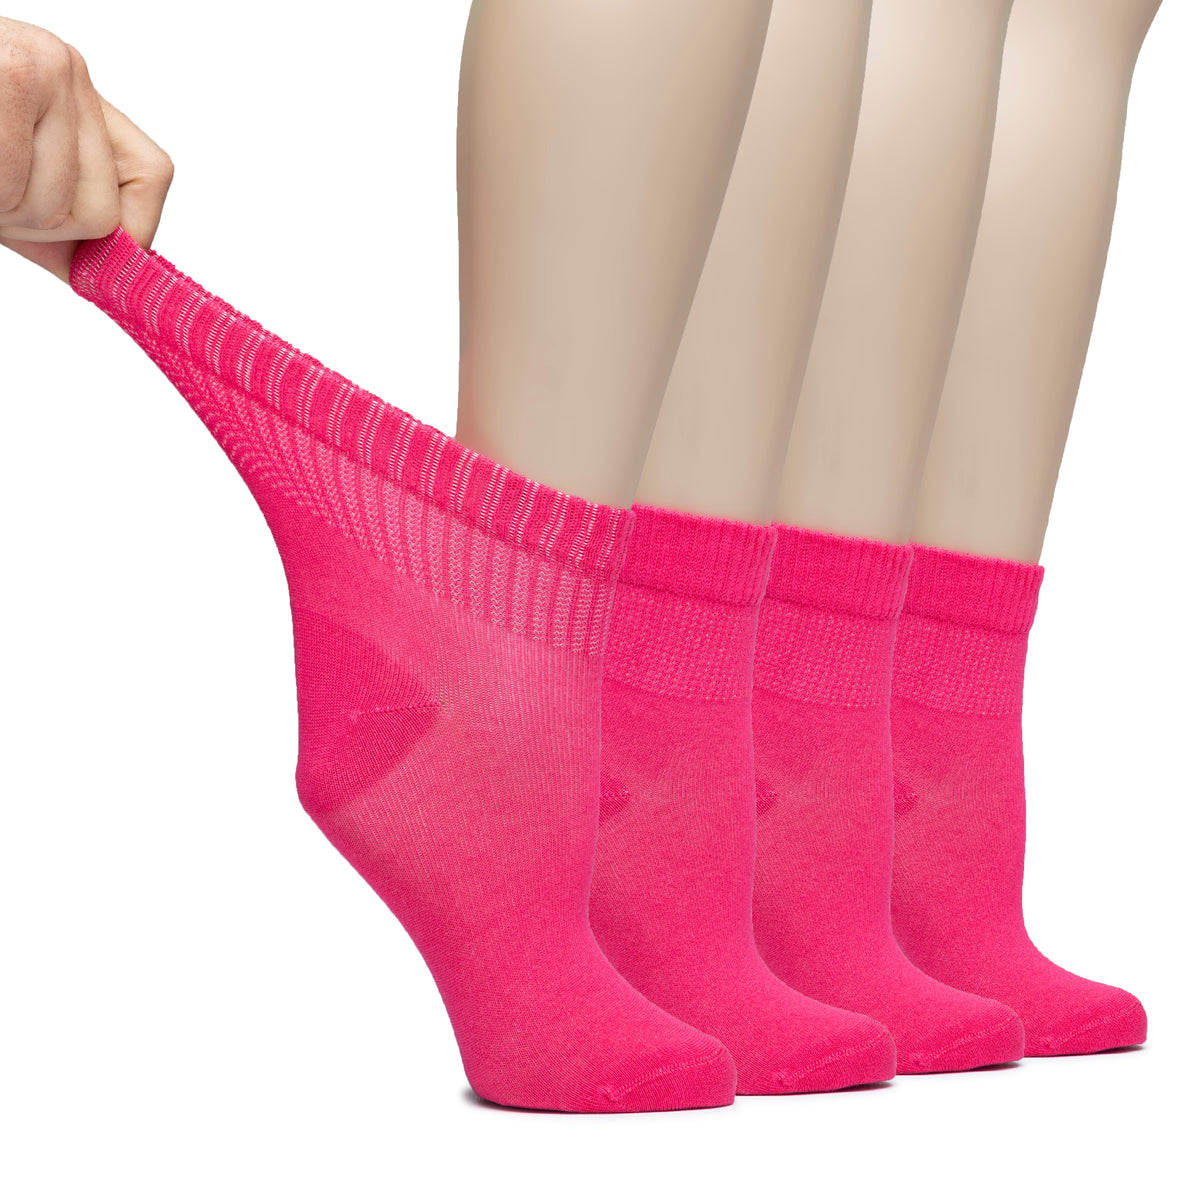 Hugh Ugoli Lightweight Women's Diabetic Ankle Socks Bamboo Thin Socks Seamless Toe and Non-Binding Top, 4 Pairs, , Shoe Size: 6-9/10-12 | Shoe Size: 6-9 | Peach Orange